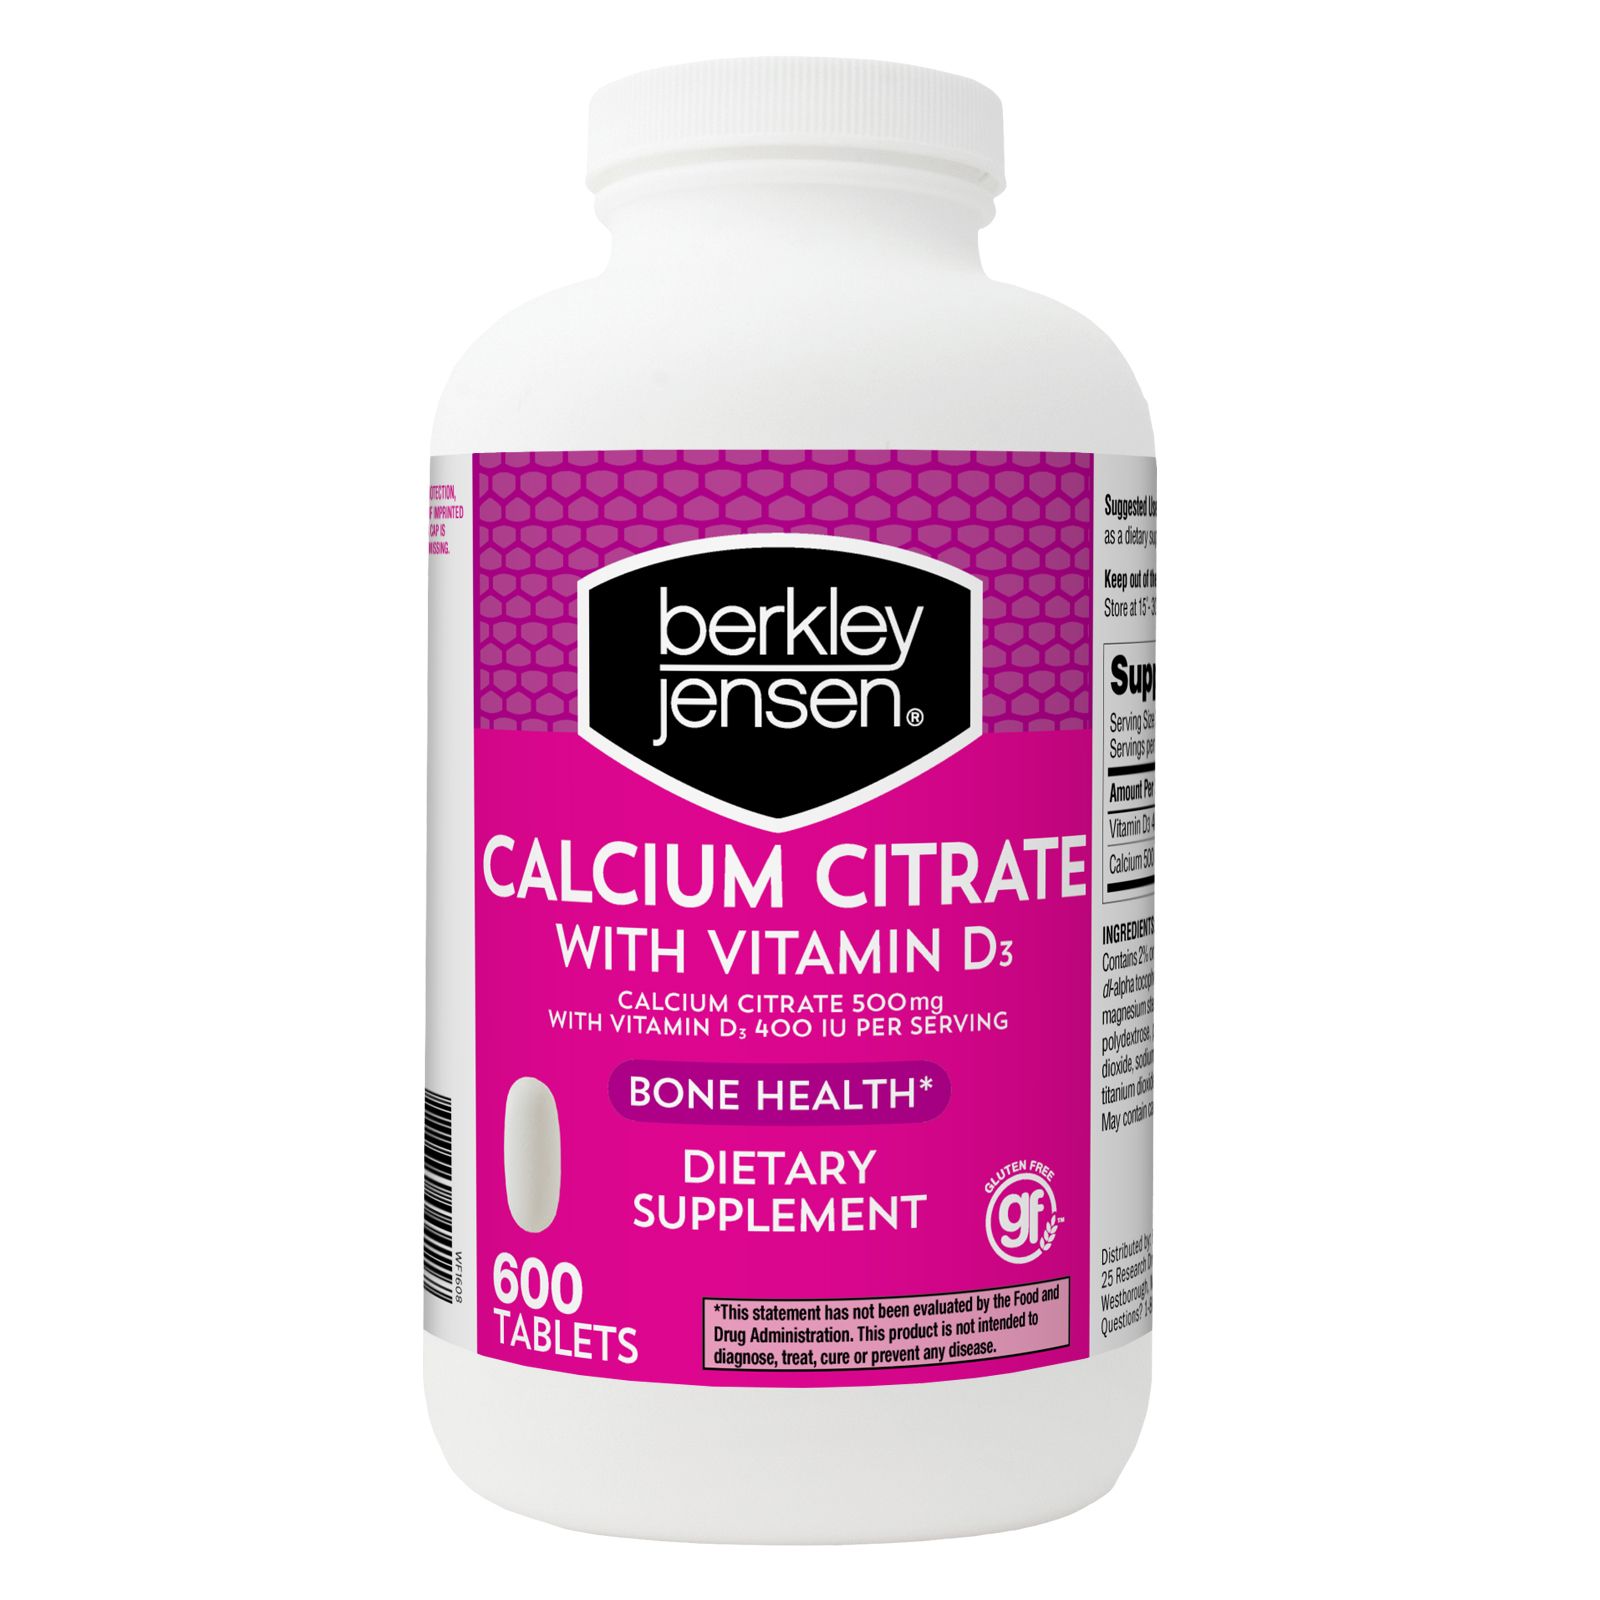 Berkley Jensen Calcium Citrate 500mg With Vitamin D 600 Ct